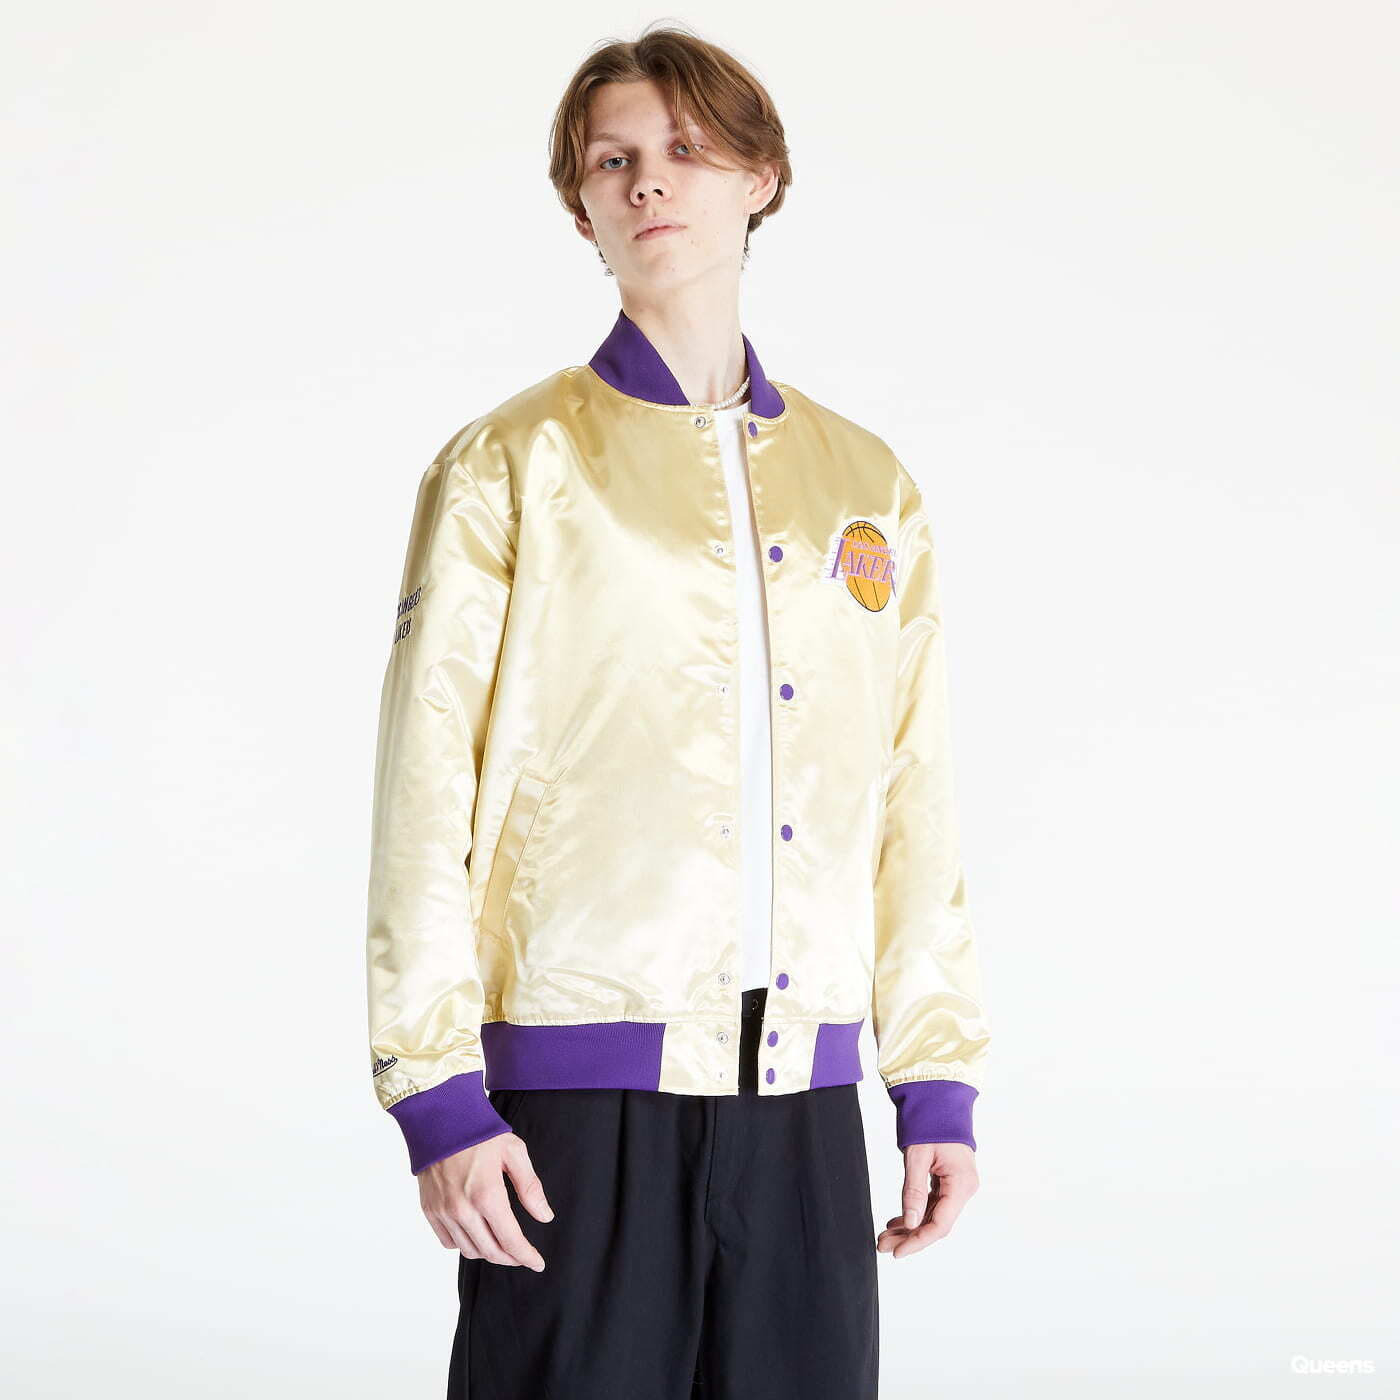 mitchell & ness fashion w satin jacket ight gold